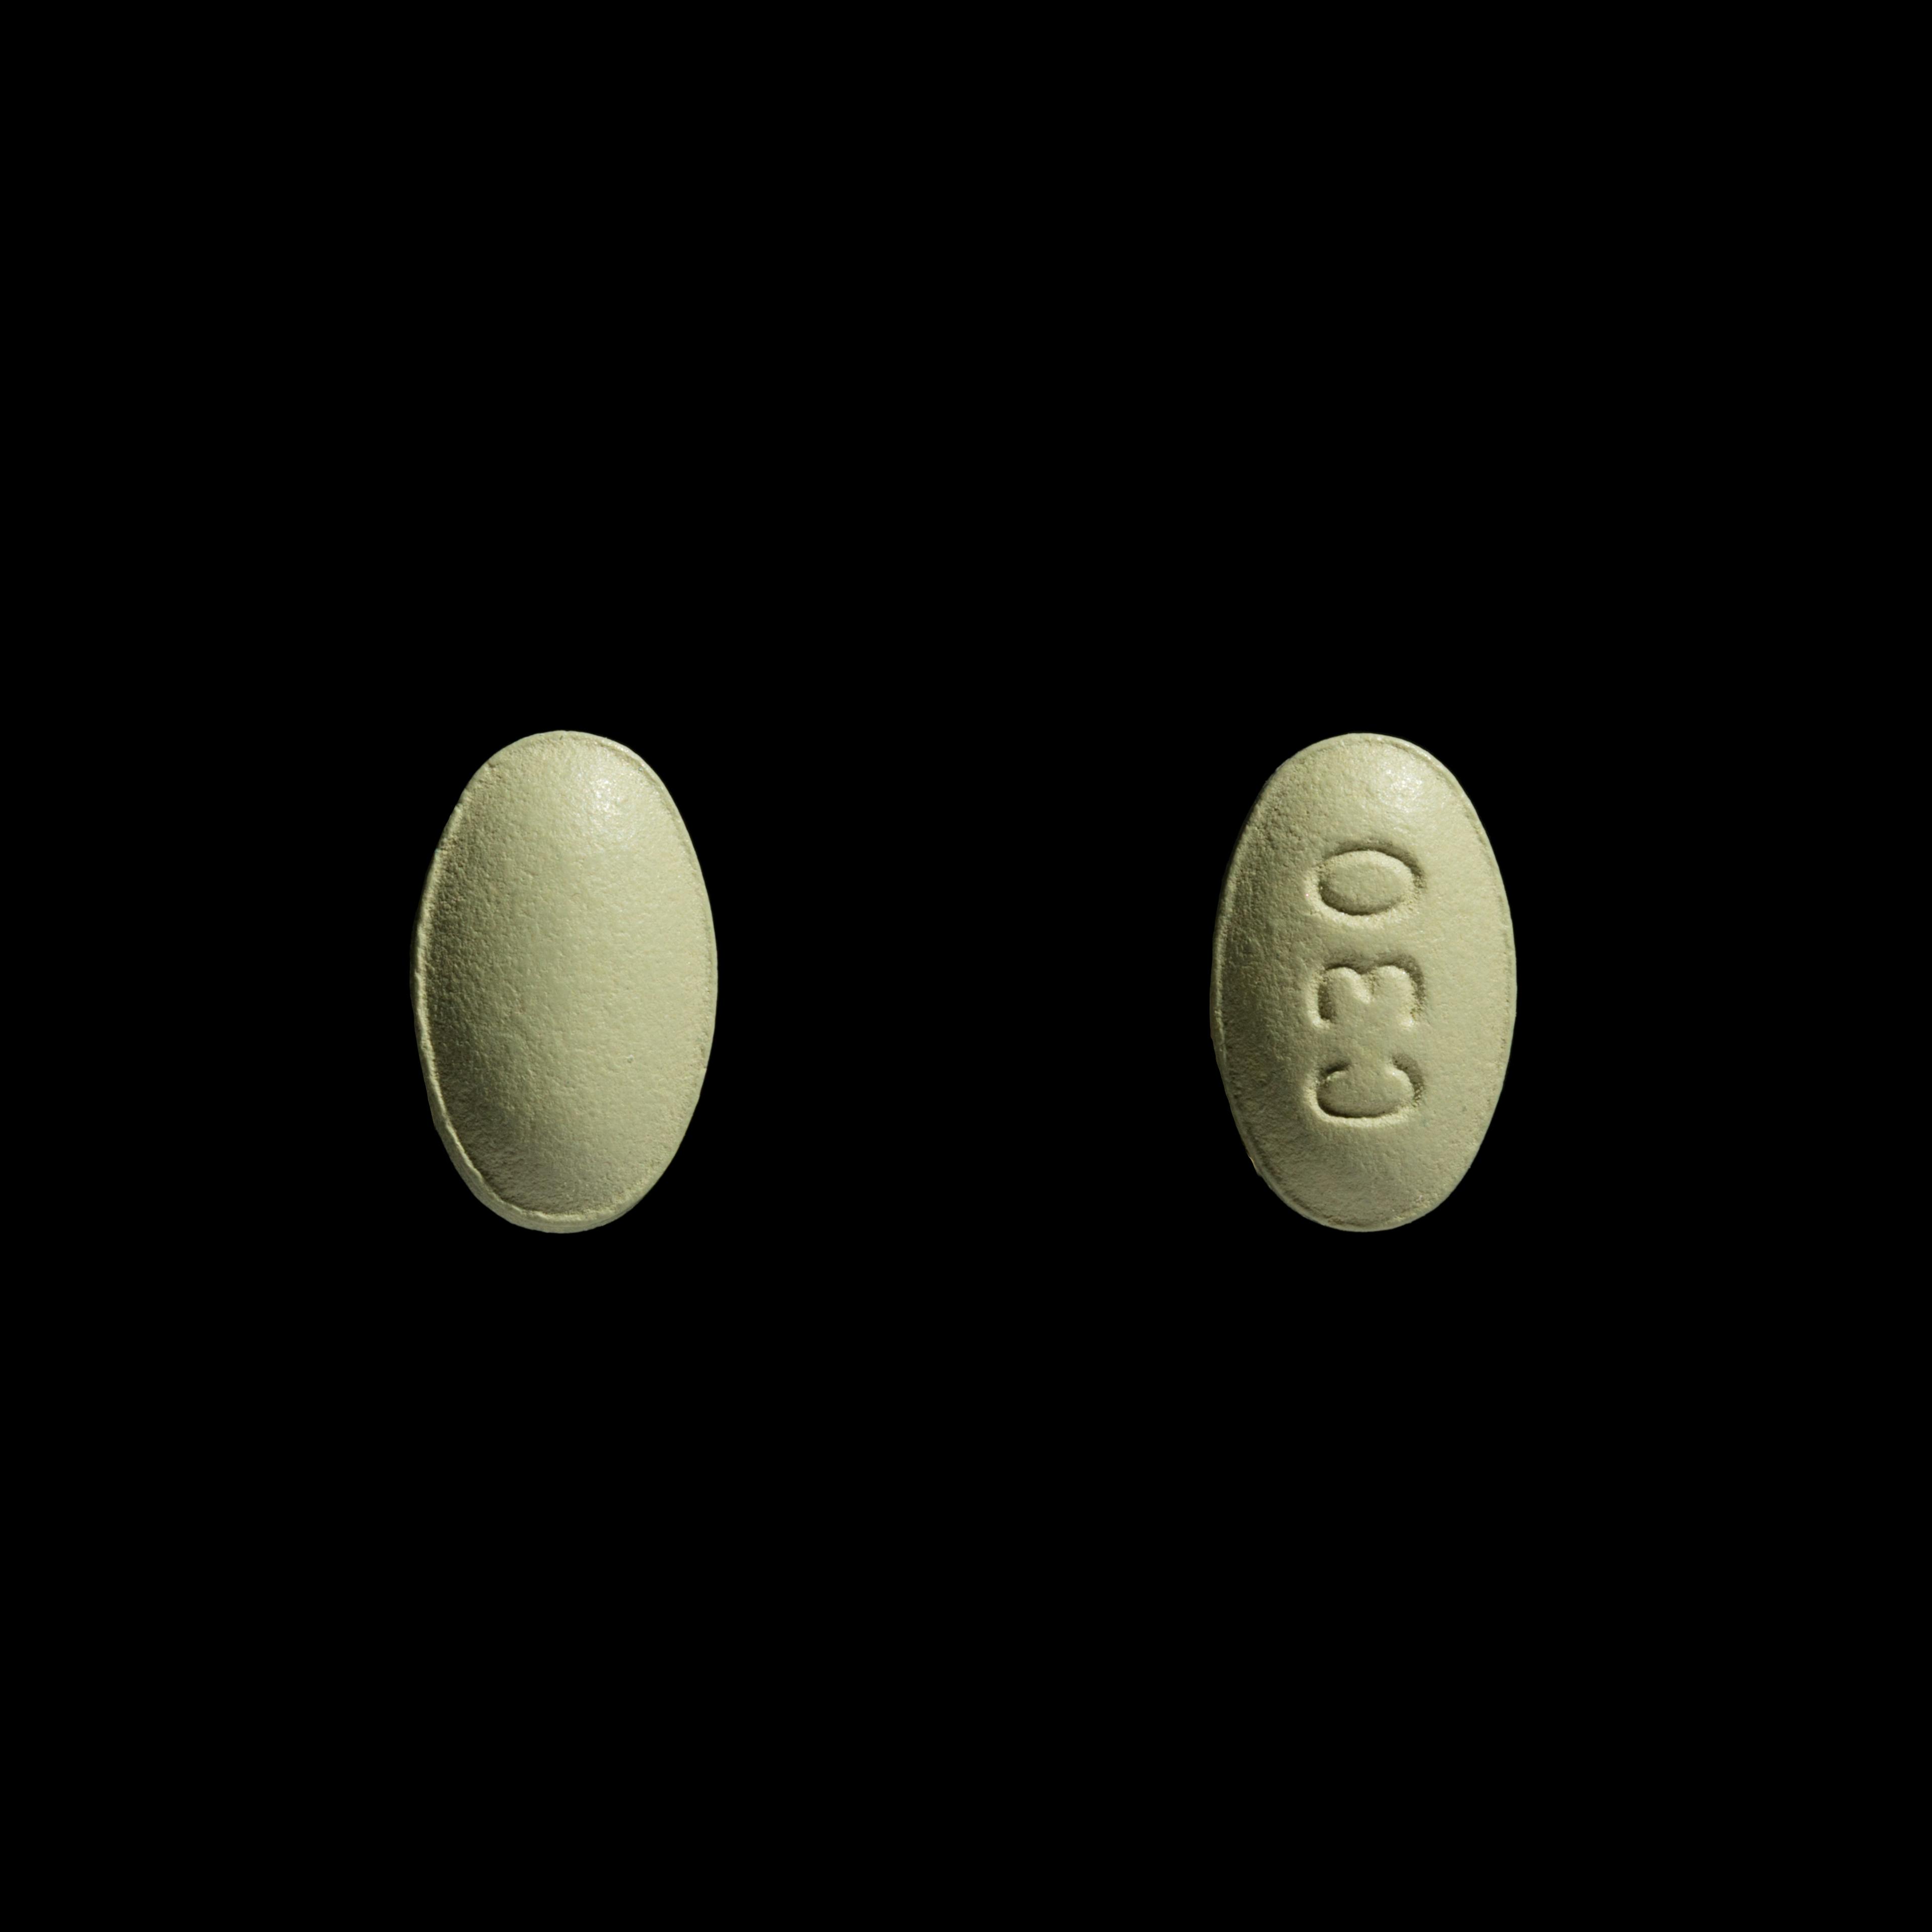 Cinacalcet ratiopharm 30 mg